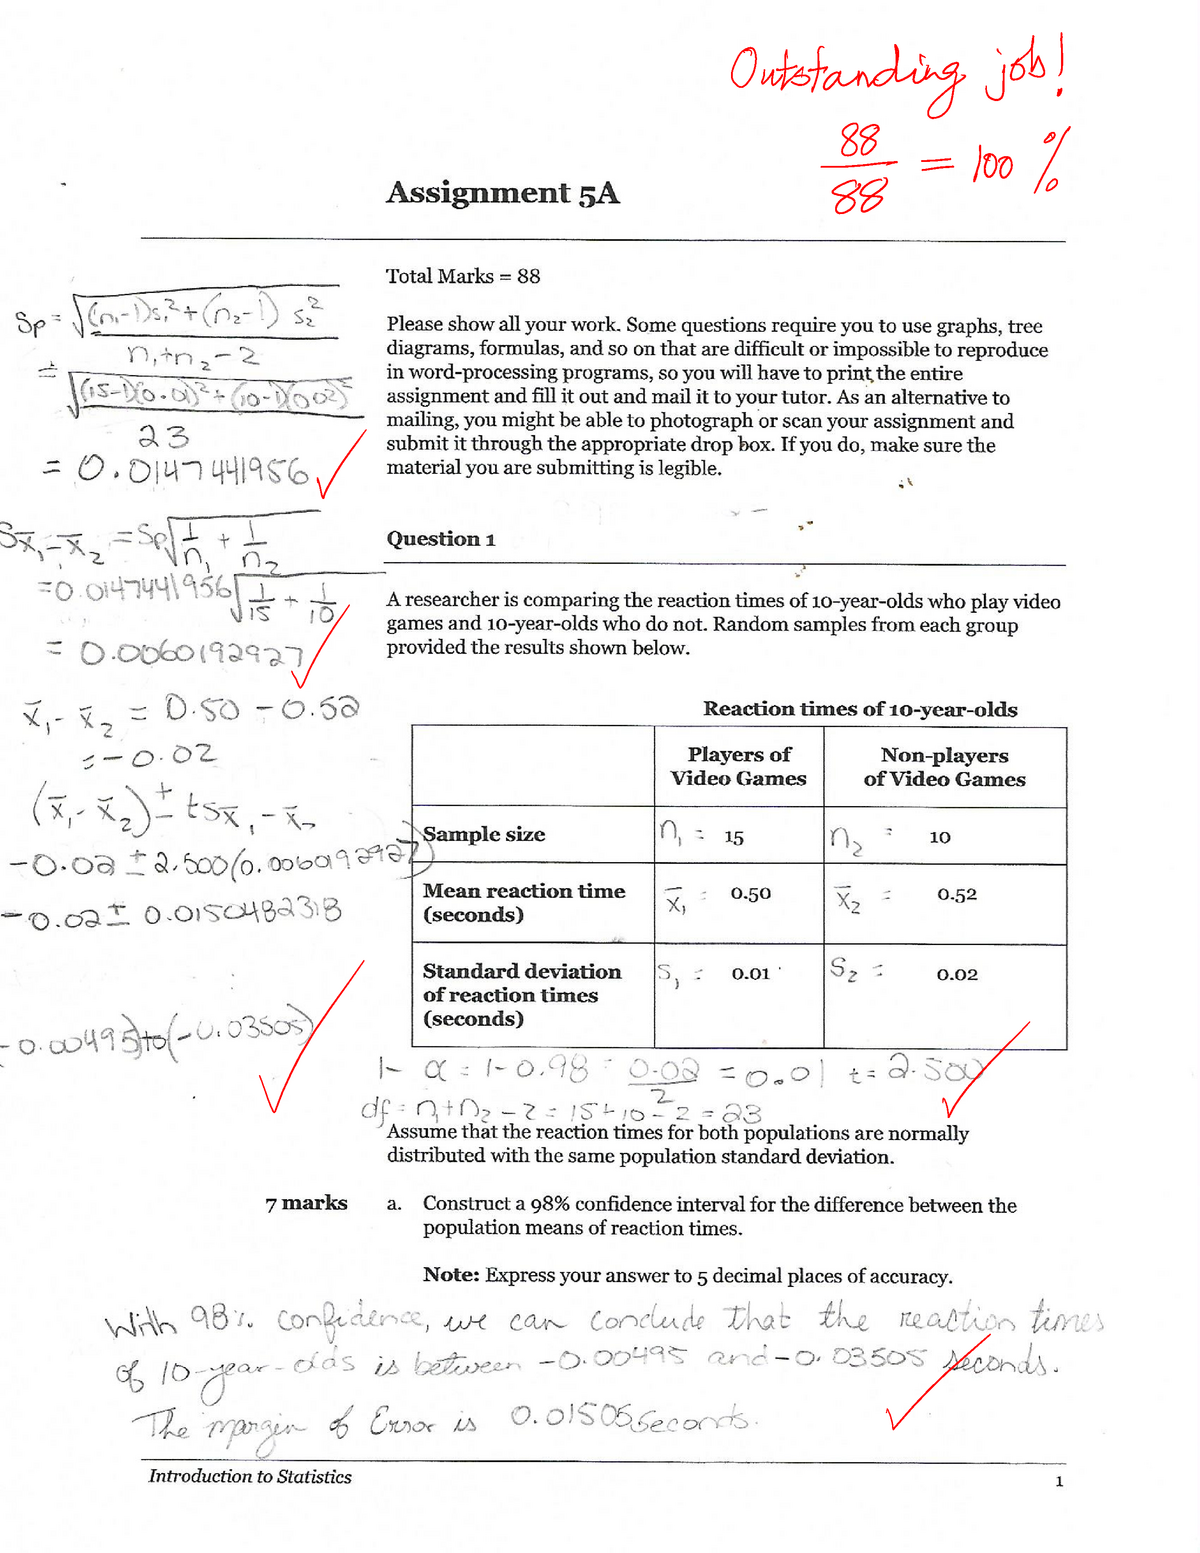 mathematics 511 assignment answers